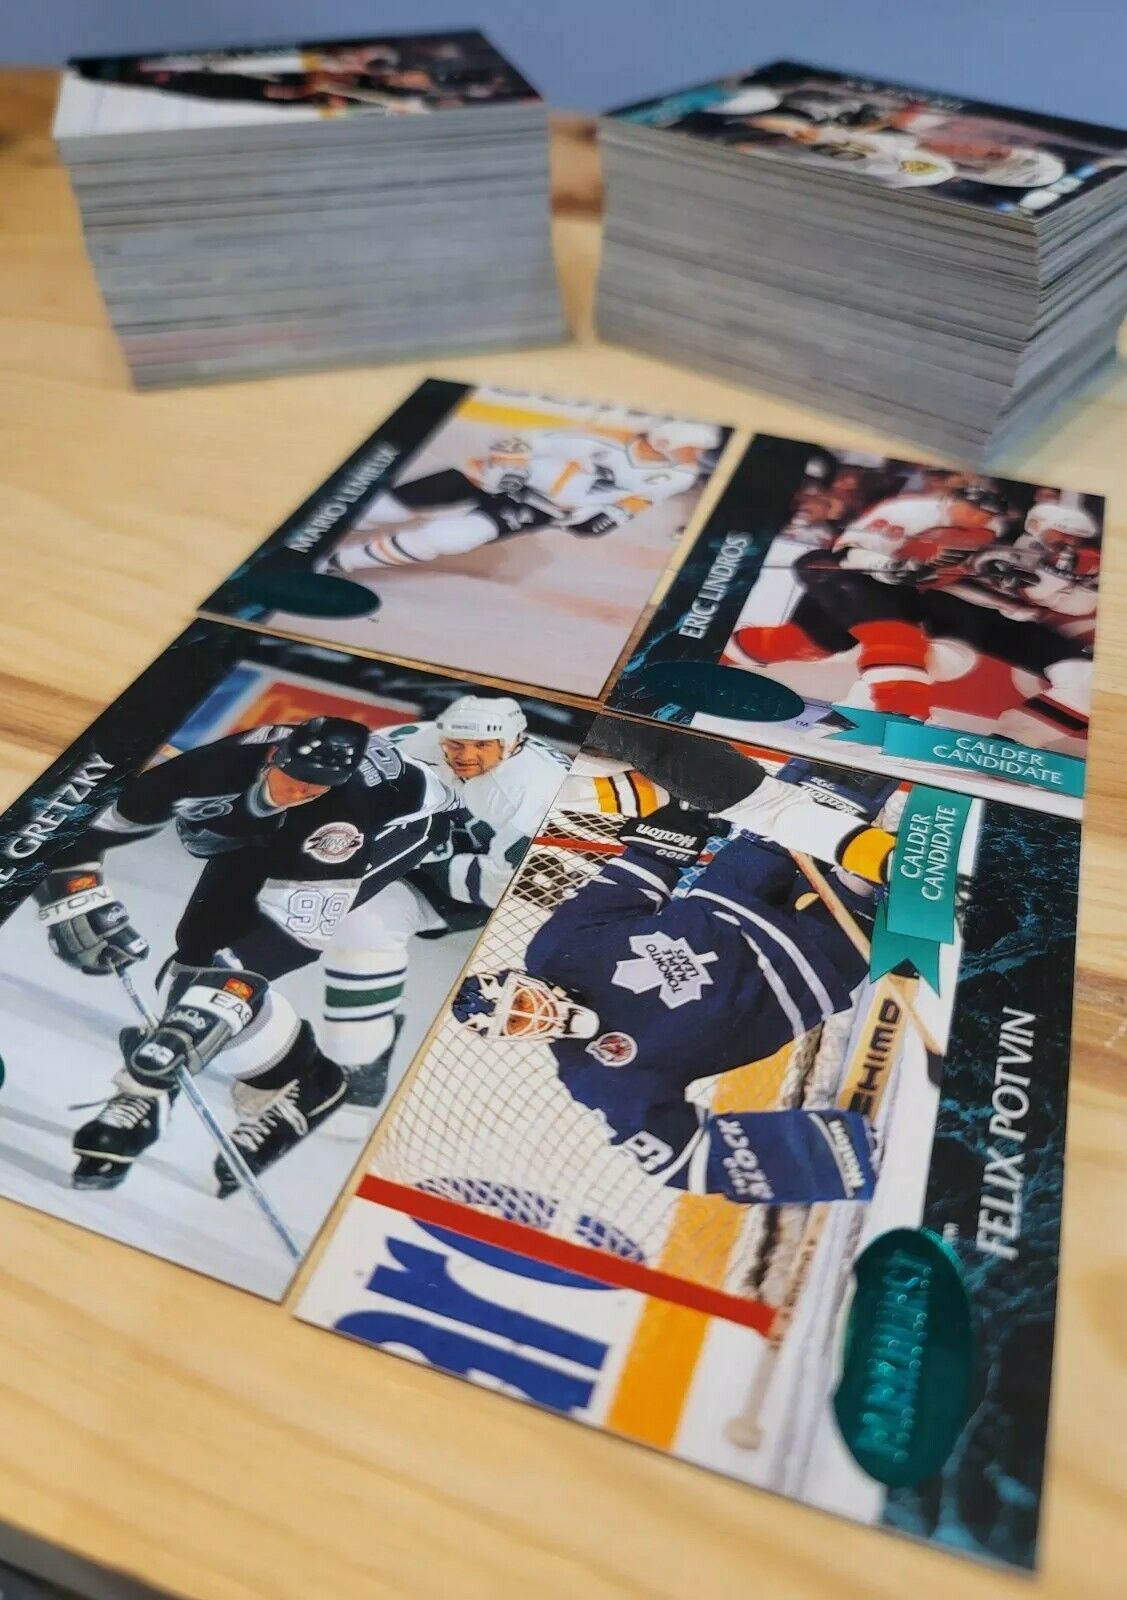 1992/93 Parkhurst Hockey Card Emerald Ice Complete Set (240 Cards) Gretzky, Roy